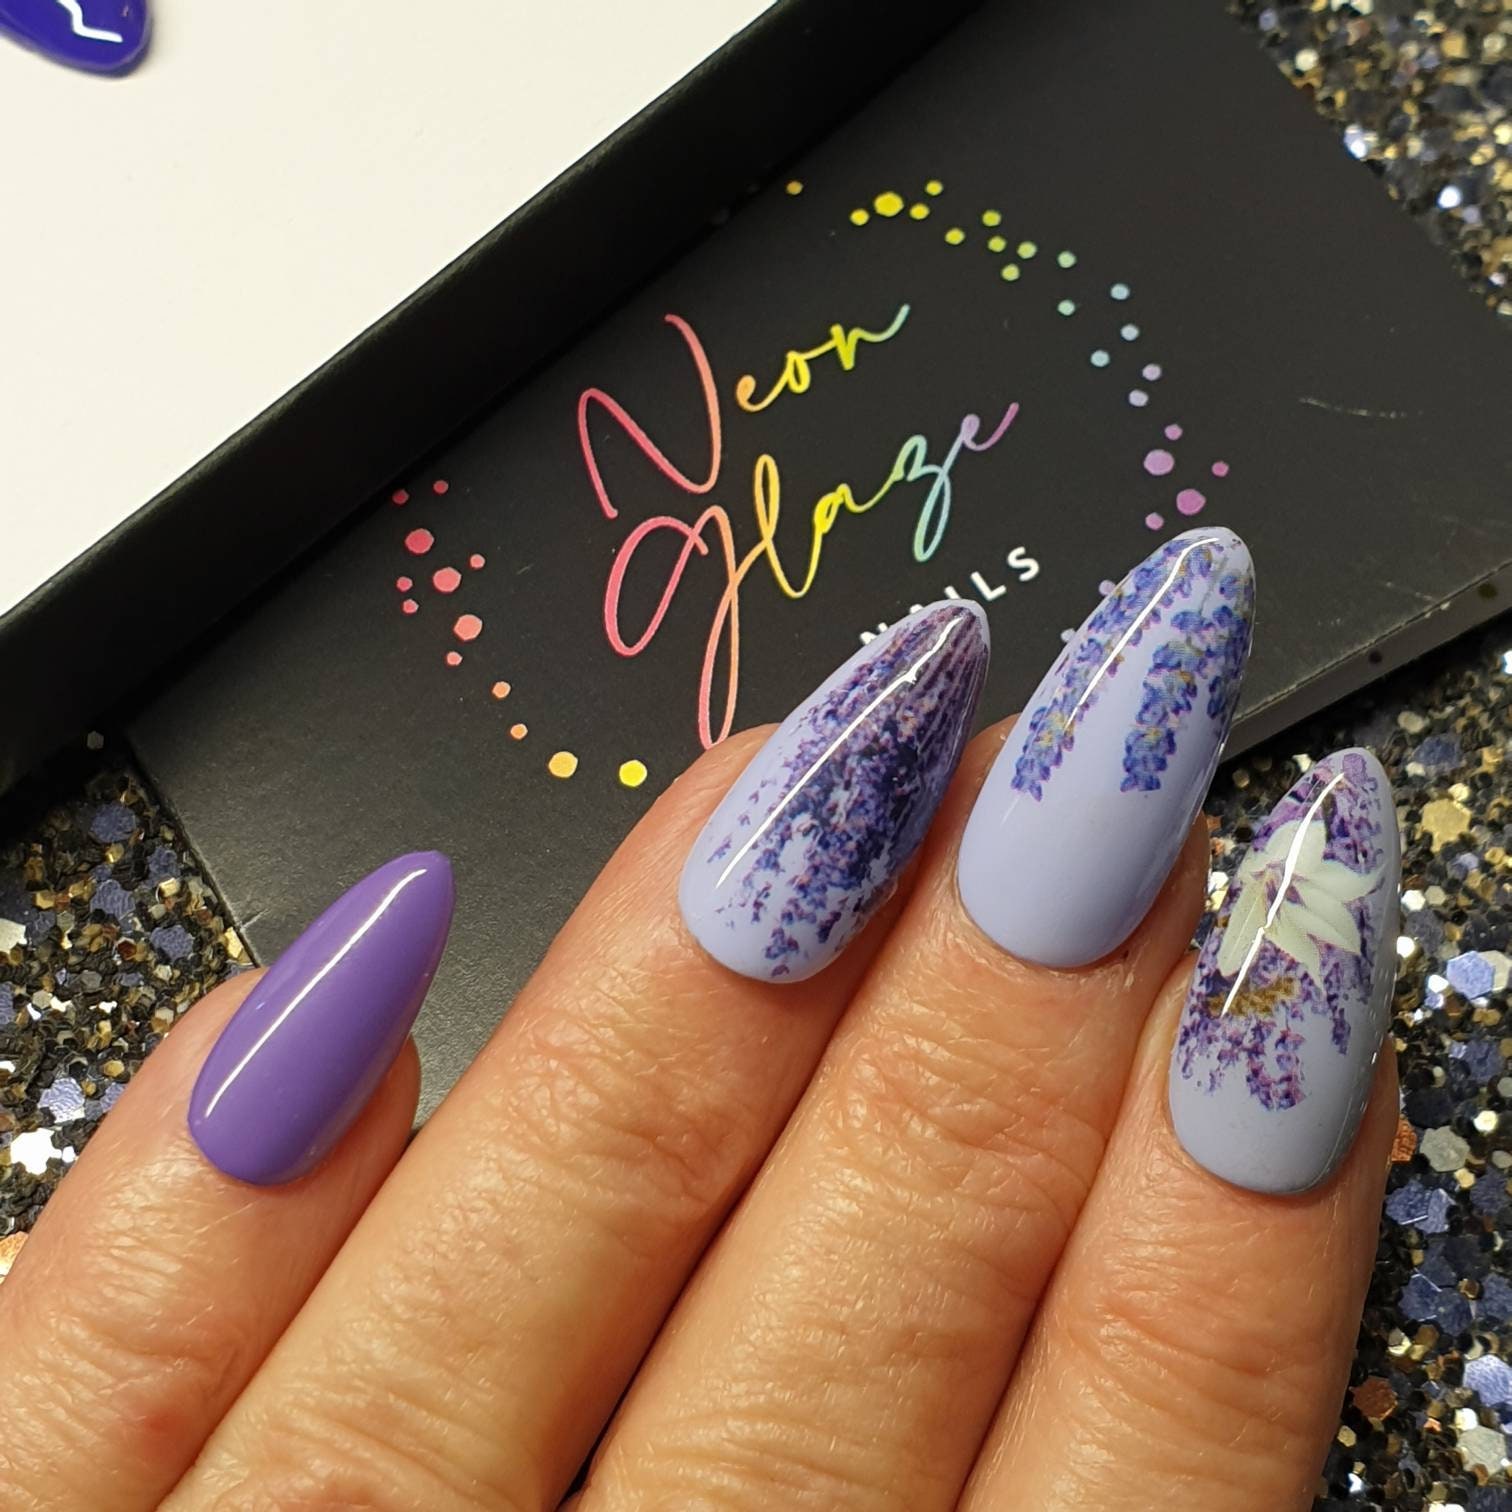 Lilac false nails